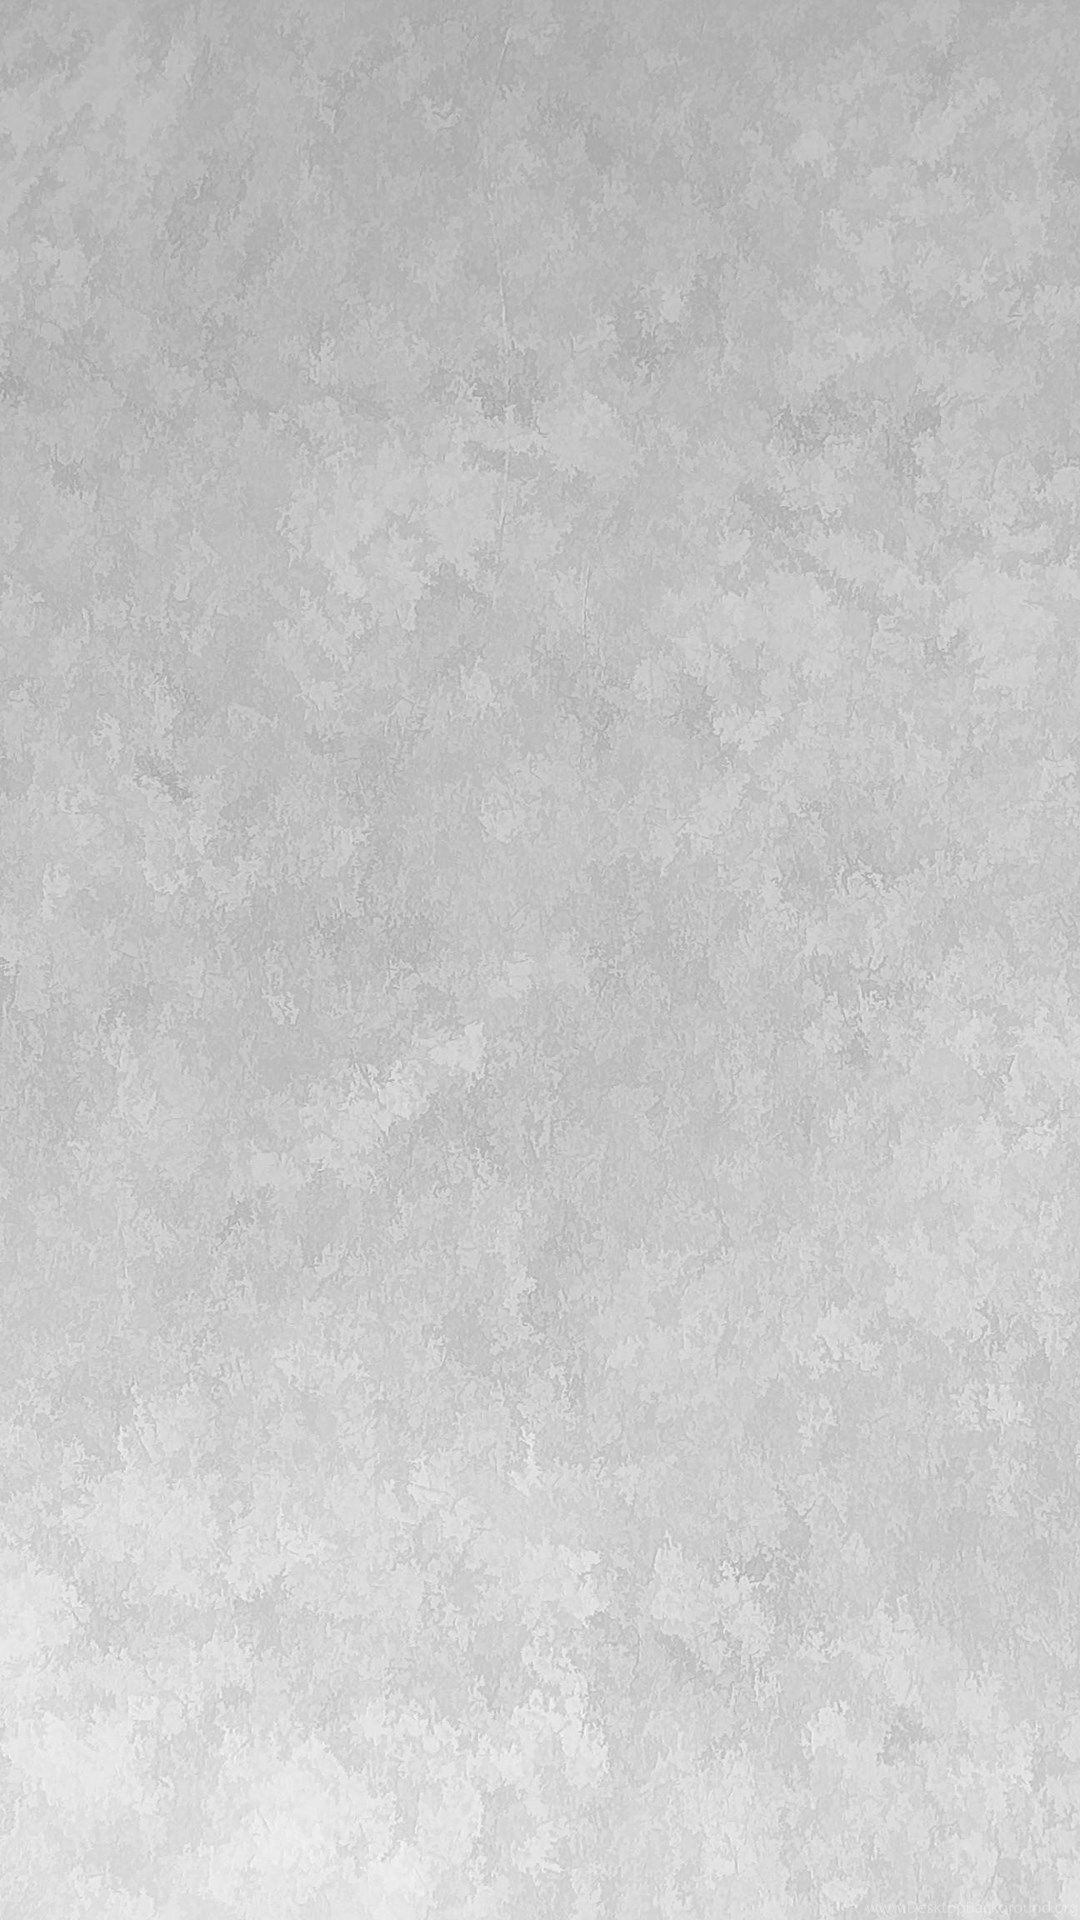 Hd wallpaper grey and white wallpaper 3072x2304